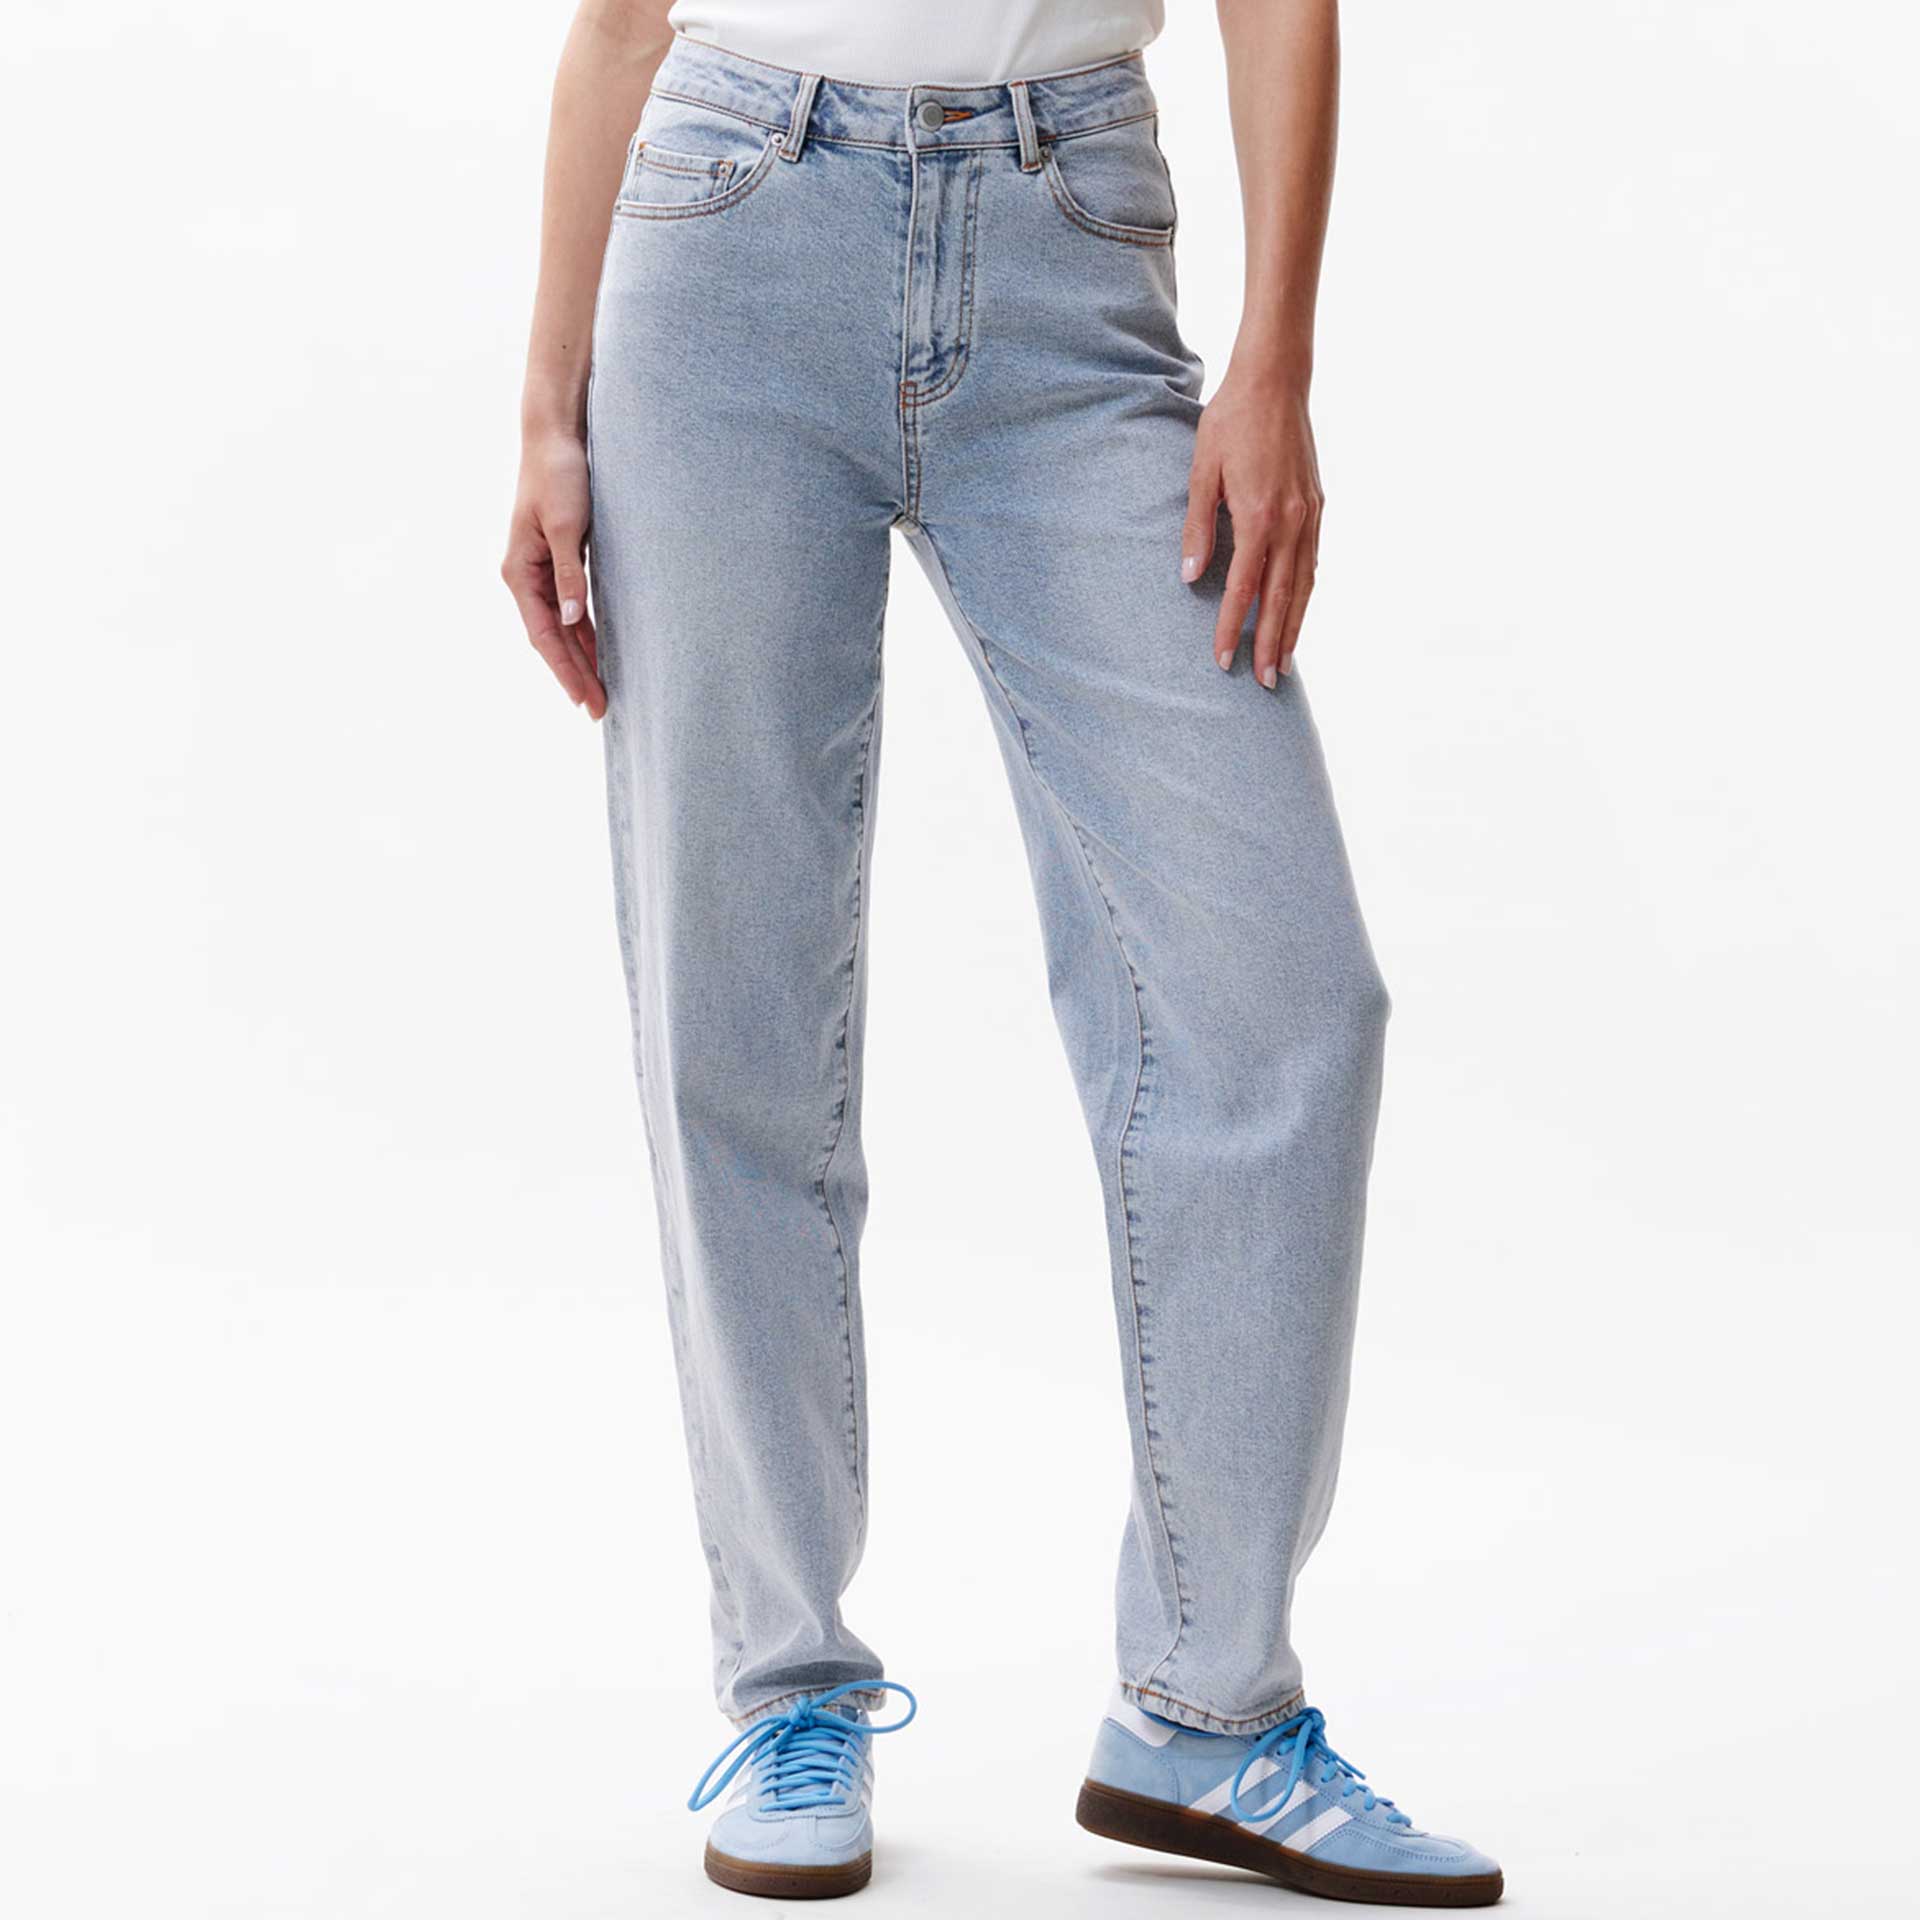 Catwalk Junkie Jeans Barrel